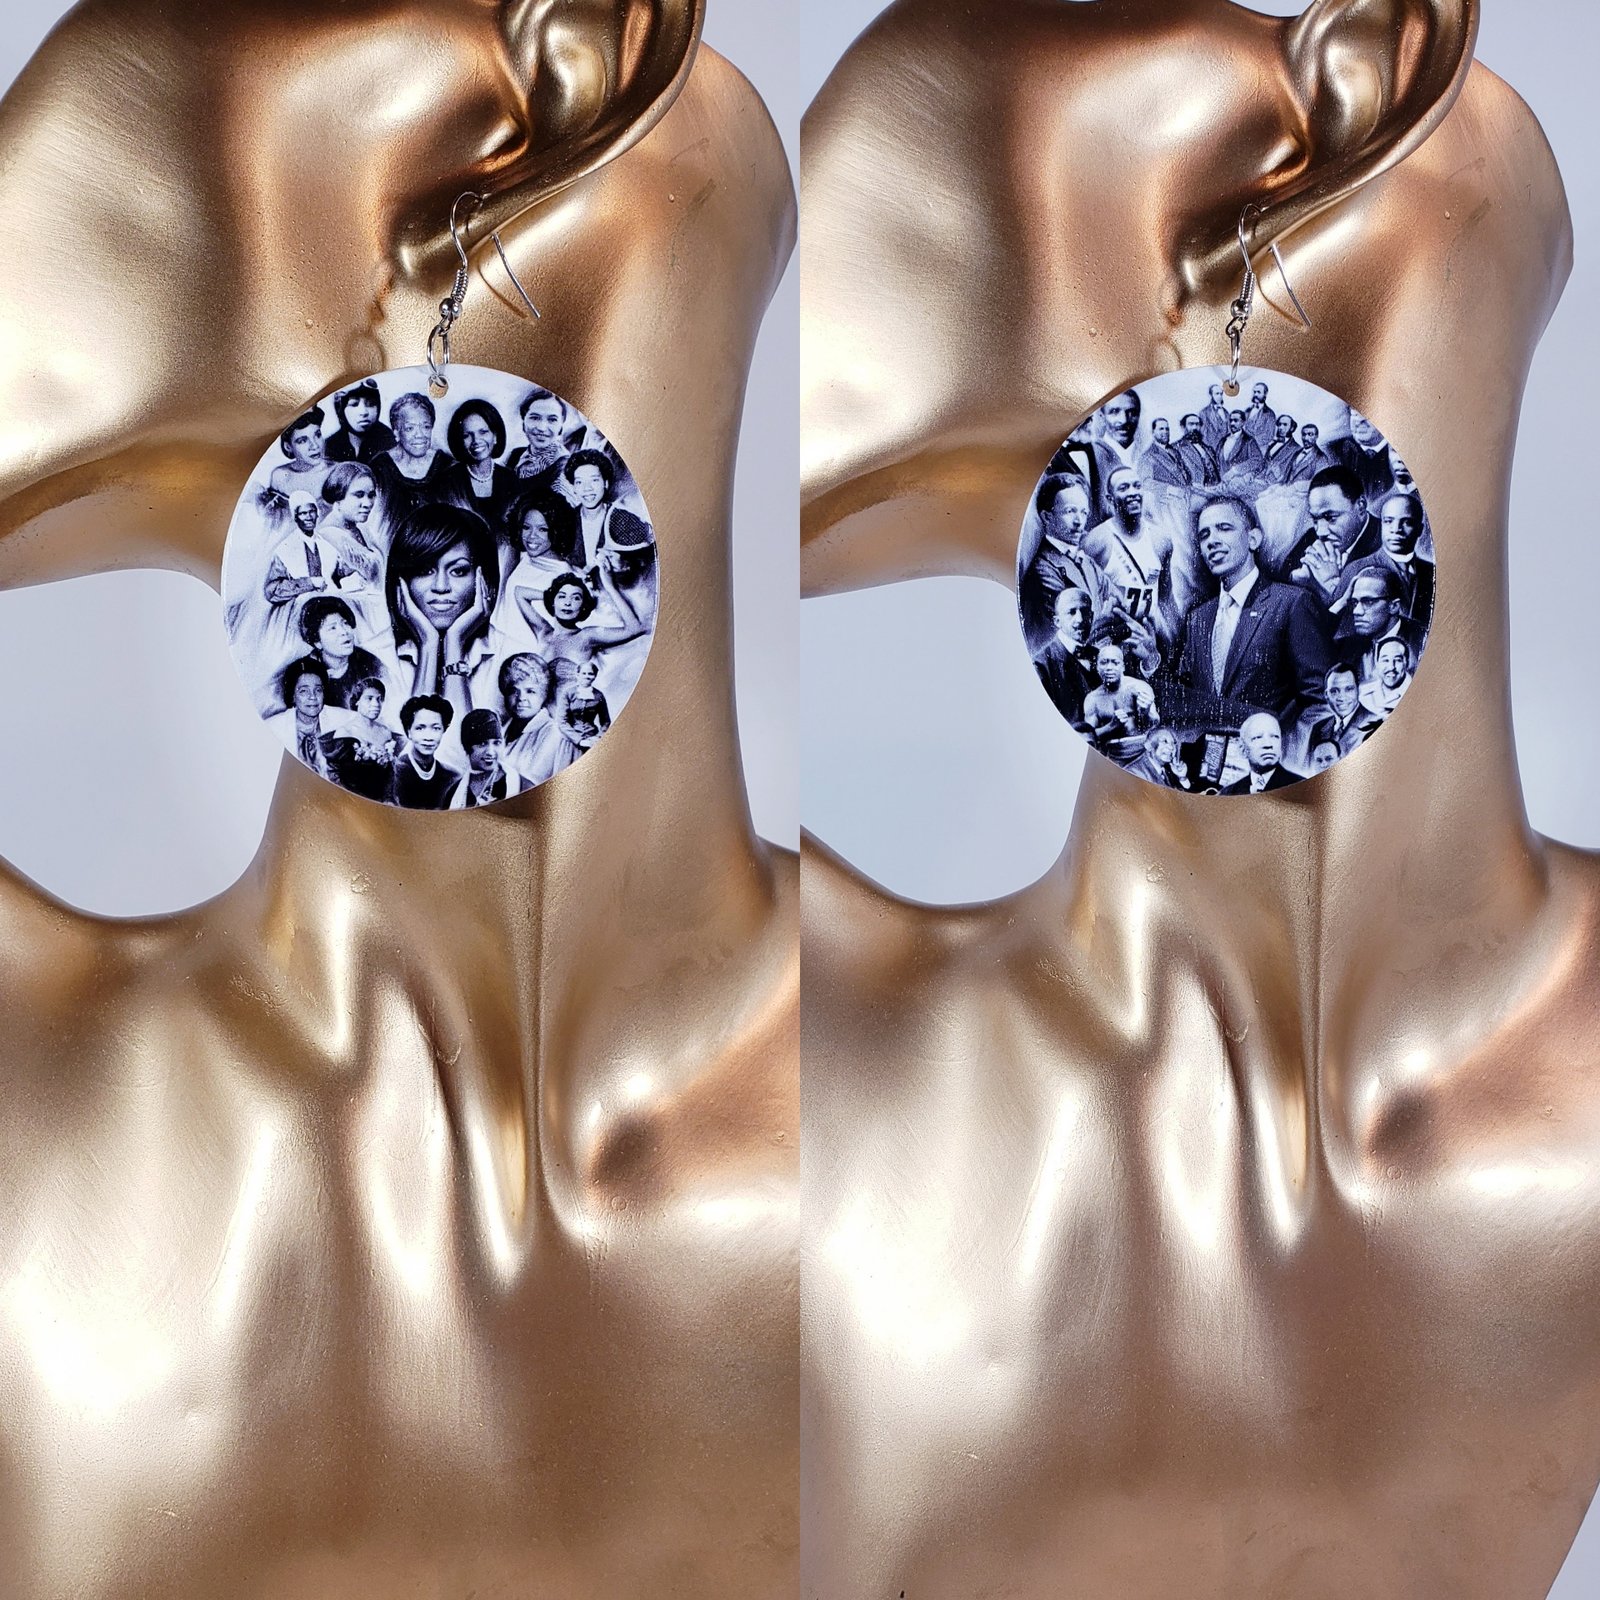 Pair of 1 Black Long Earrings for Girls and Women Black Earrings Crystal